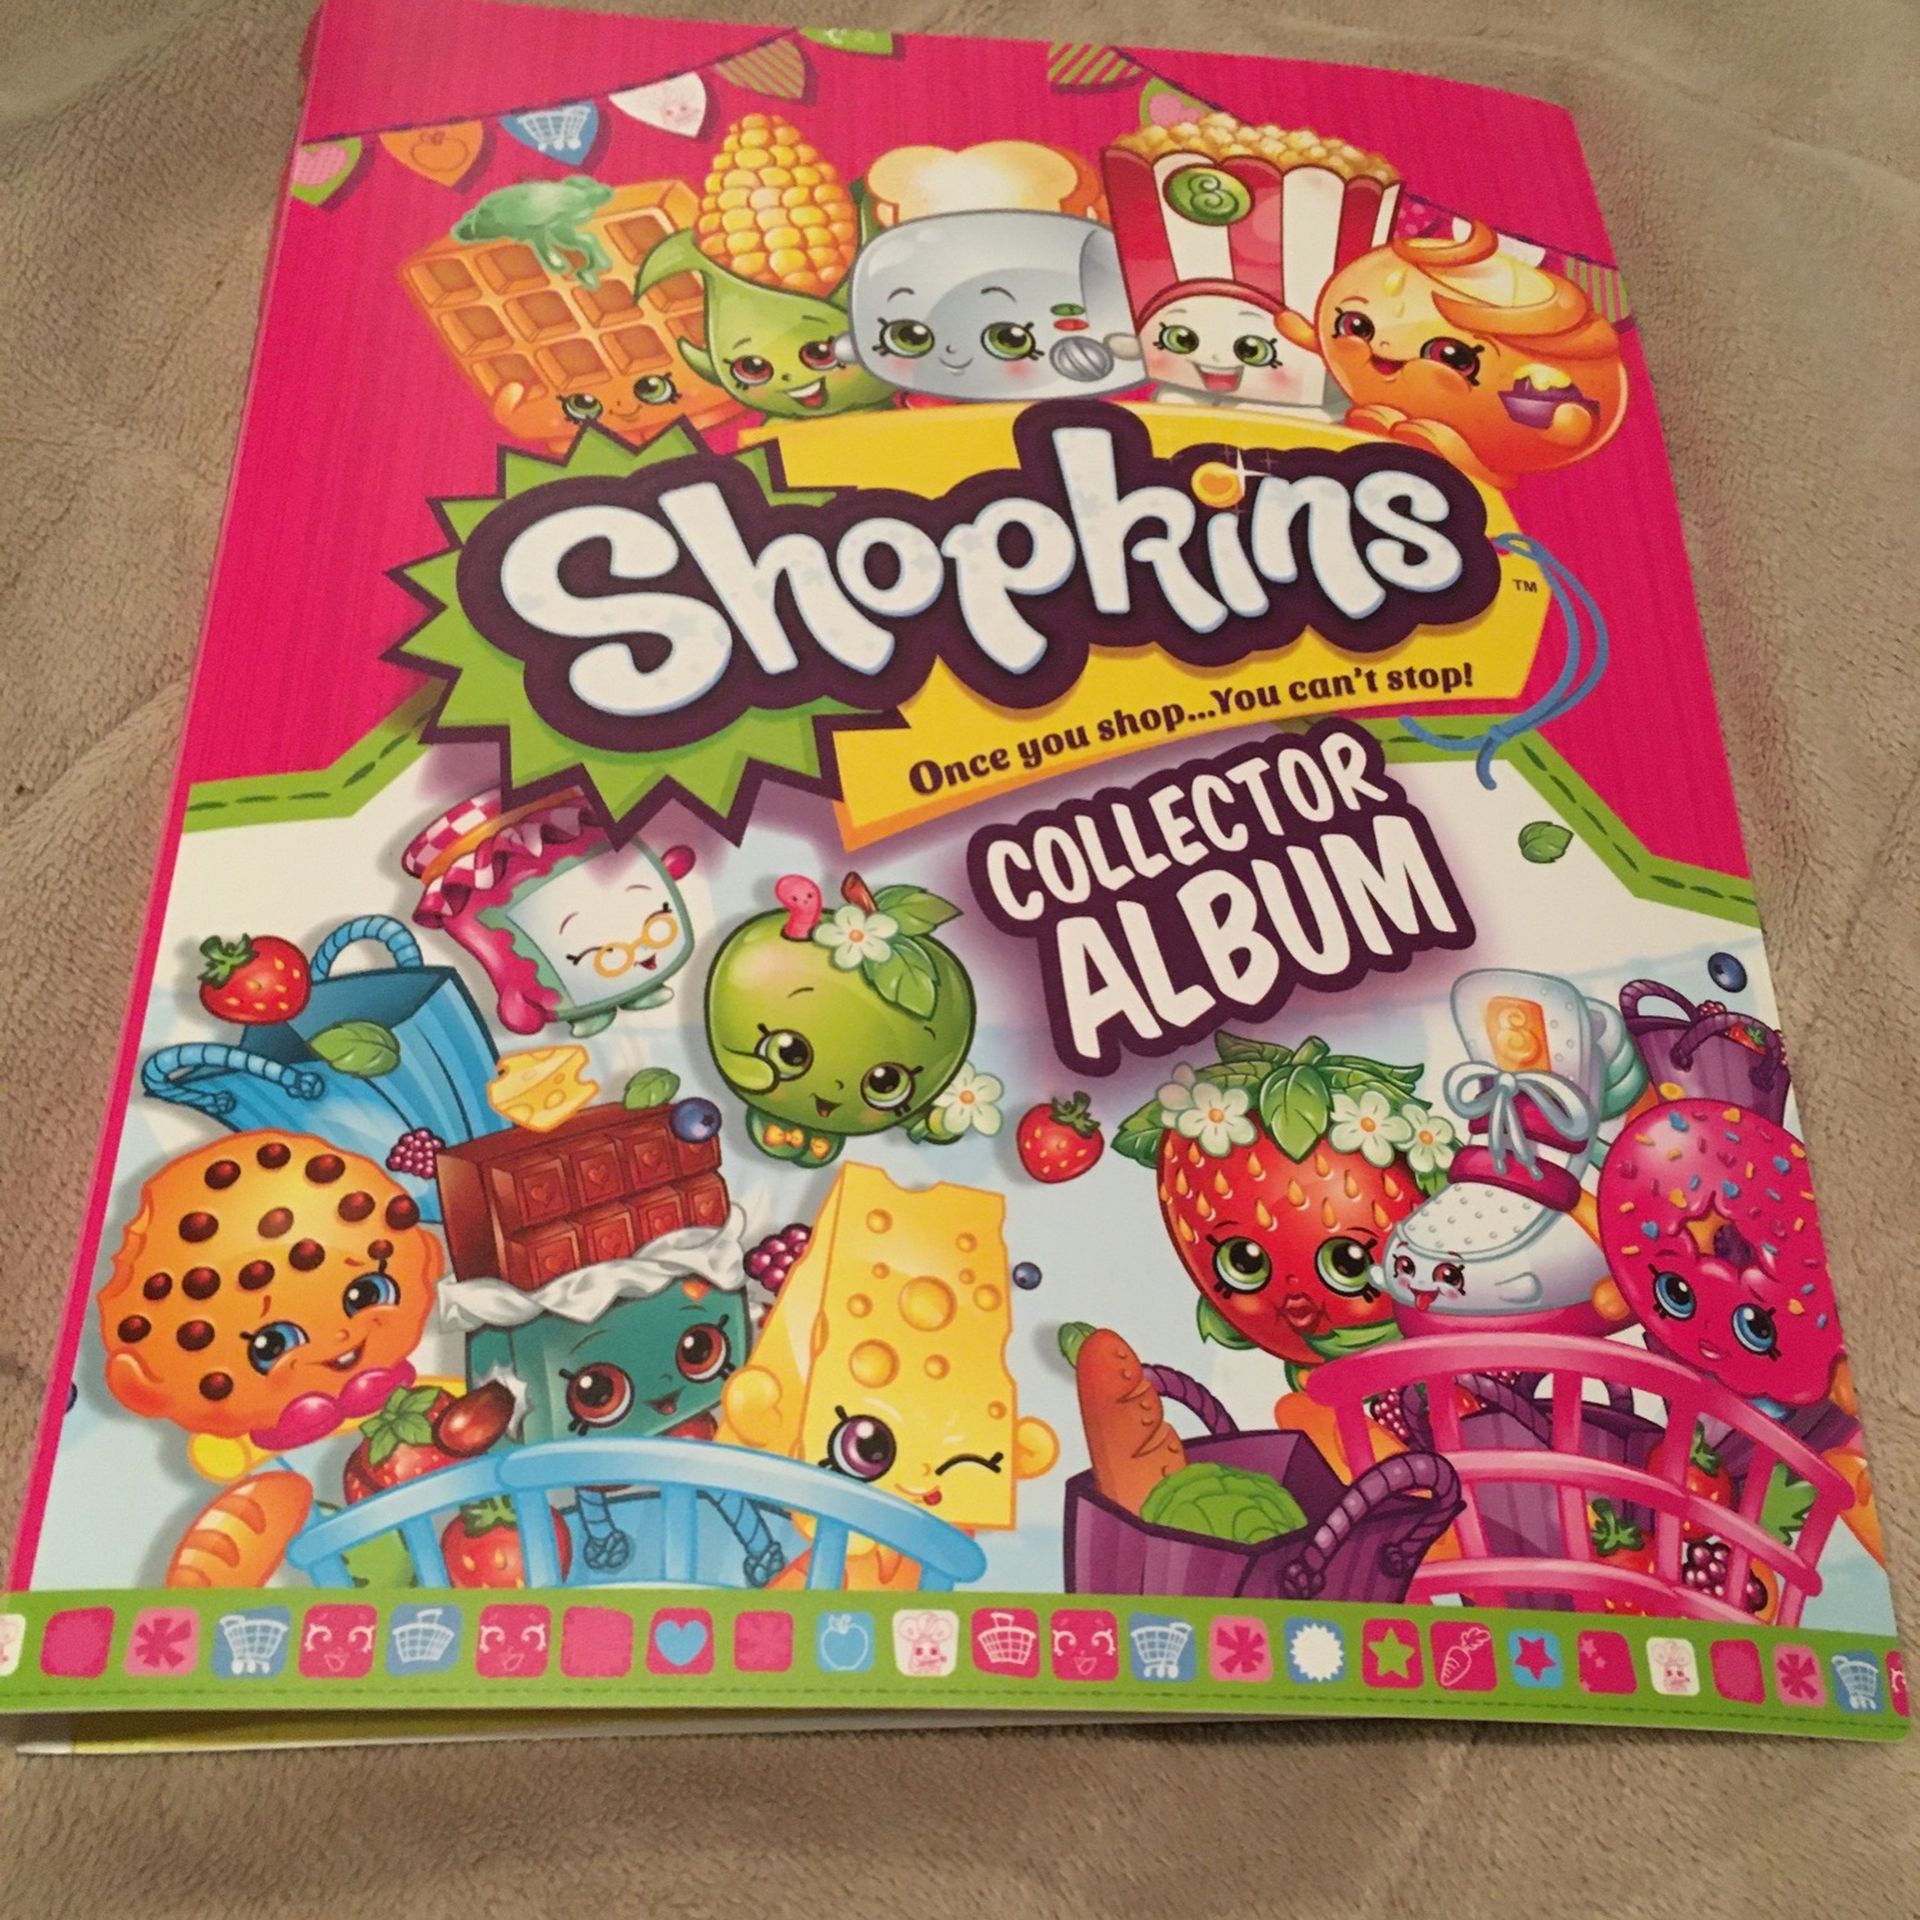 Shopkins collector album, seasons 1 & 2 collector cards